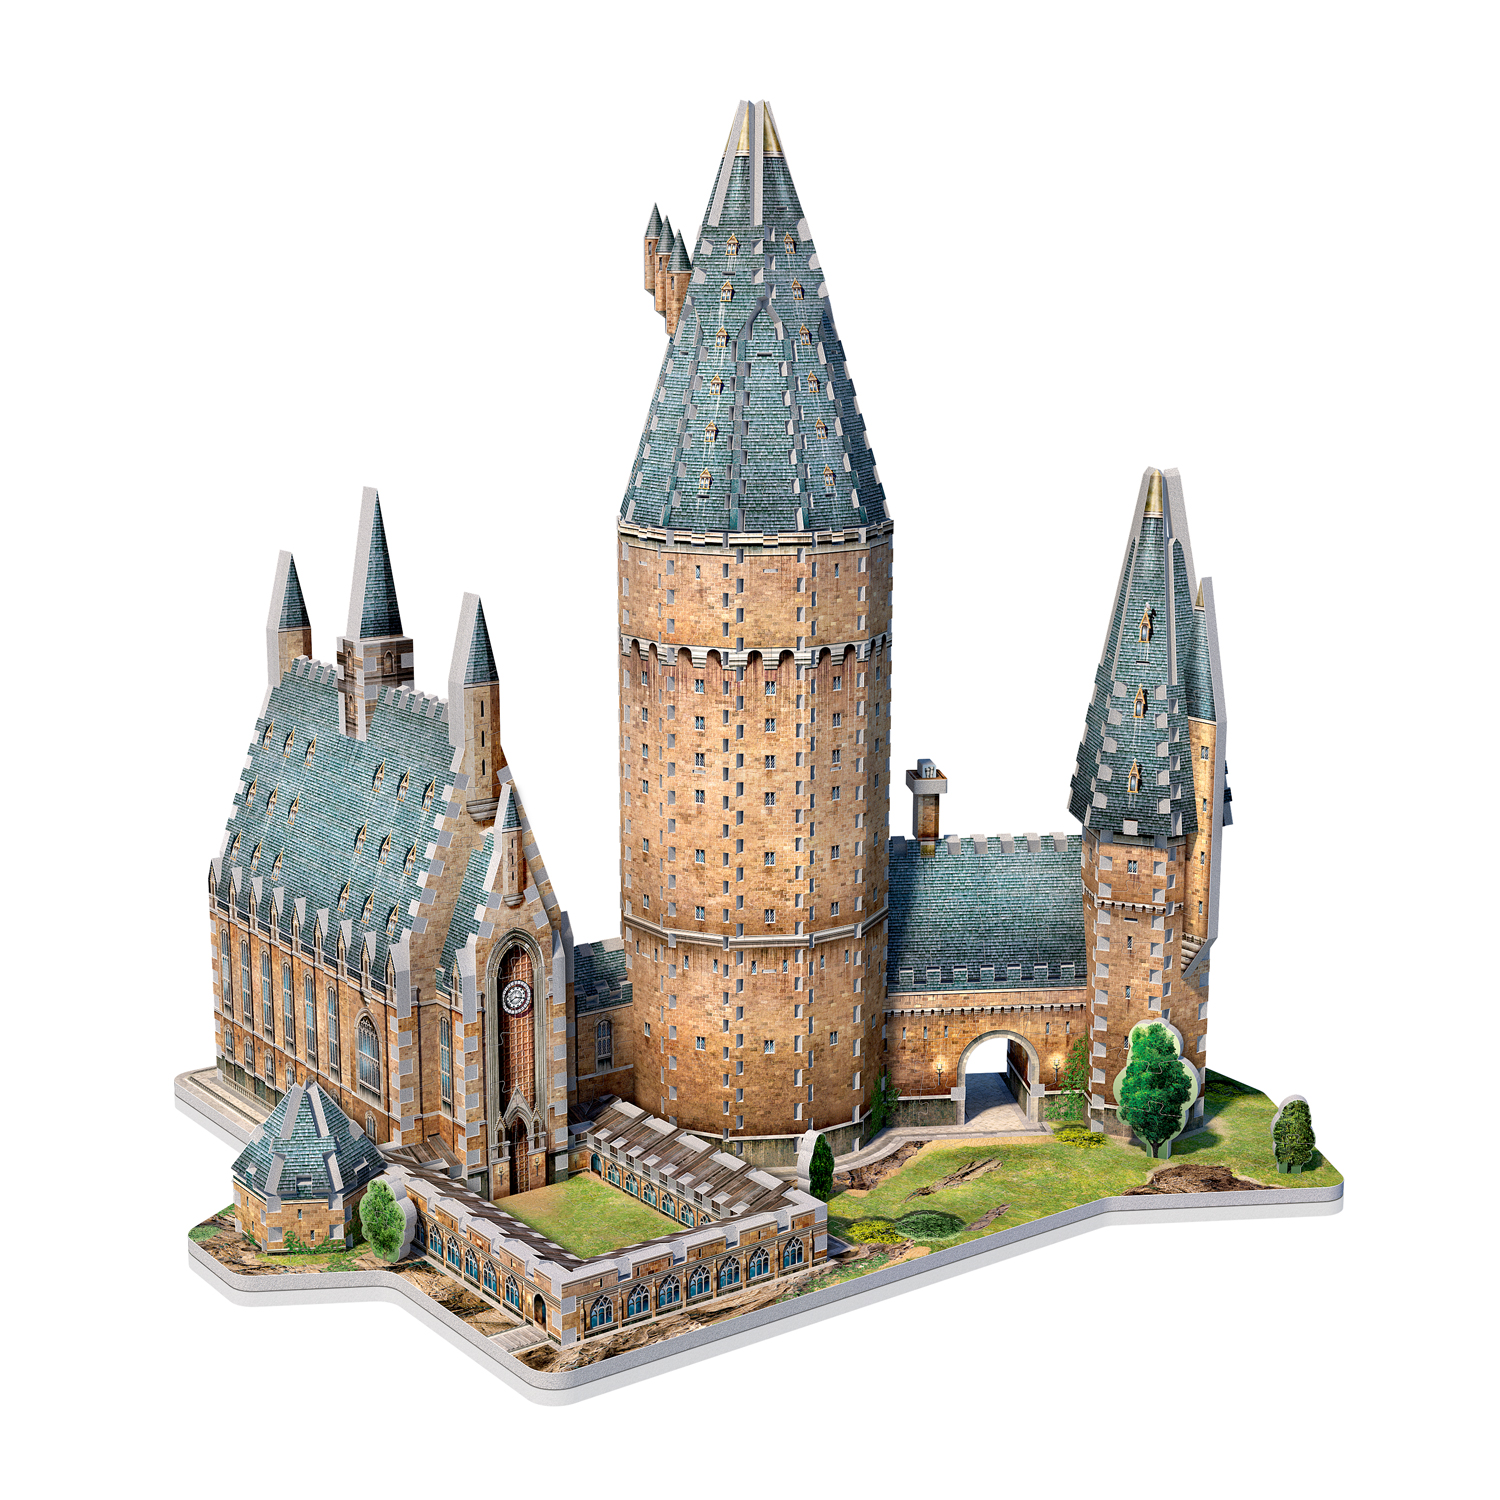 Offiziell lizenziertes Harry Potter 3D Puzzle Große Halle Great Hall 